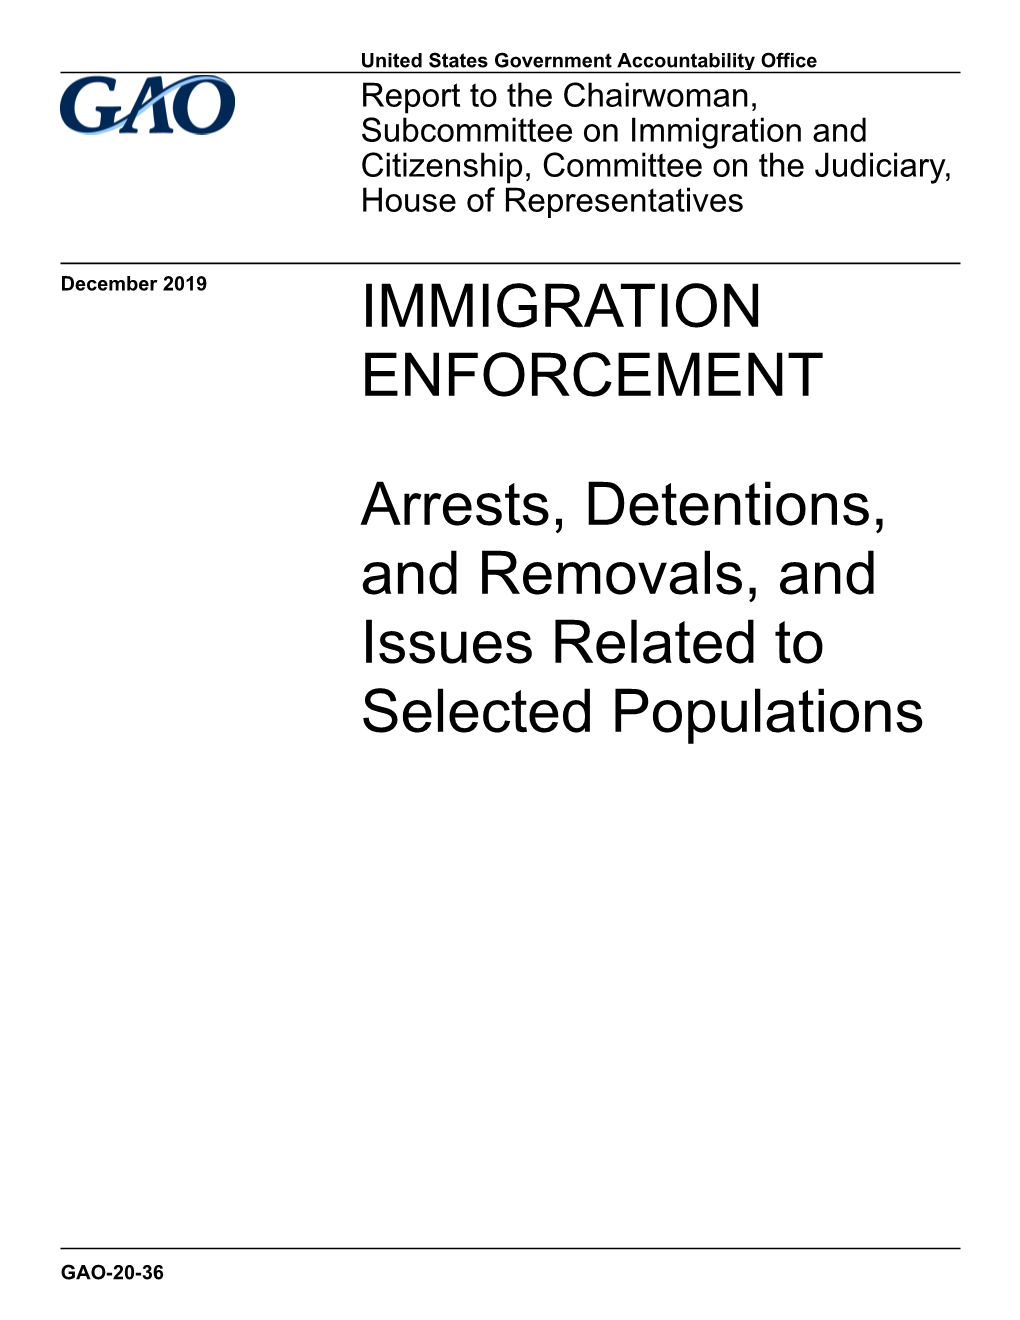 Gao-20-36, Immigration Enforcement